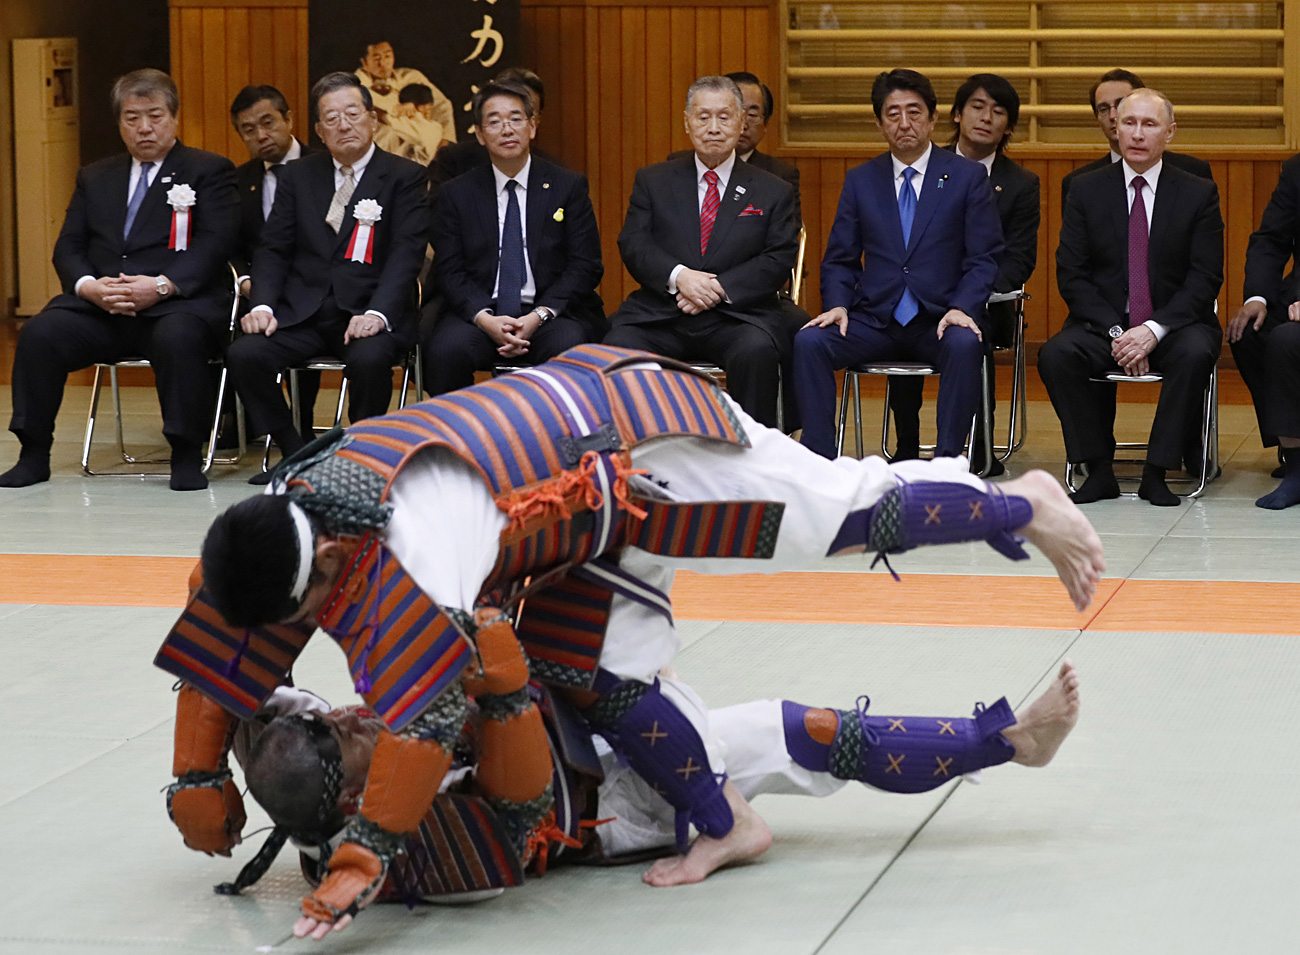 Russian President Vladimir Putin and Japanese Prime Minister Shinzo Abe watch a demonstration during their visit at Kodokan judo hall in Tokyo, Japan. 